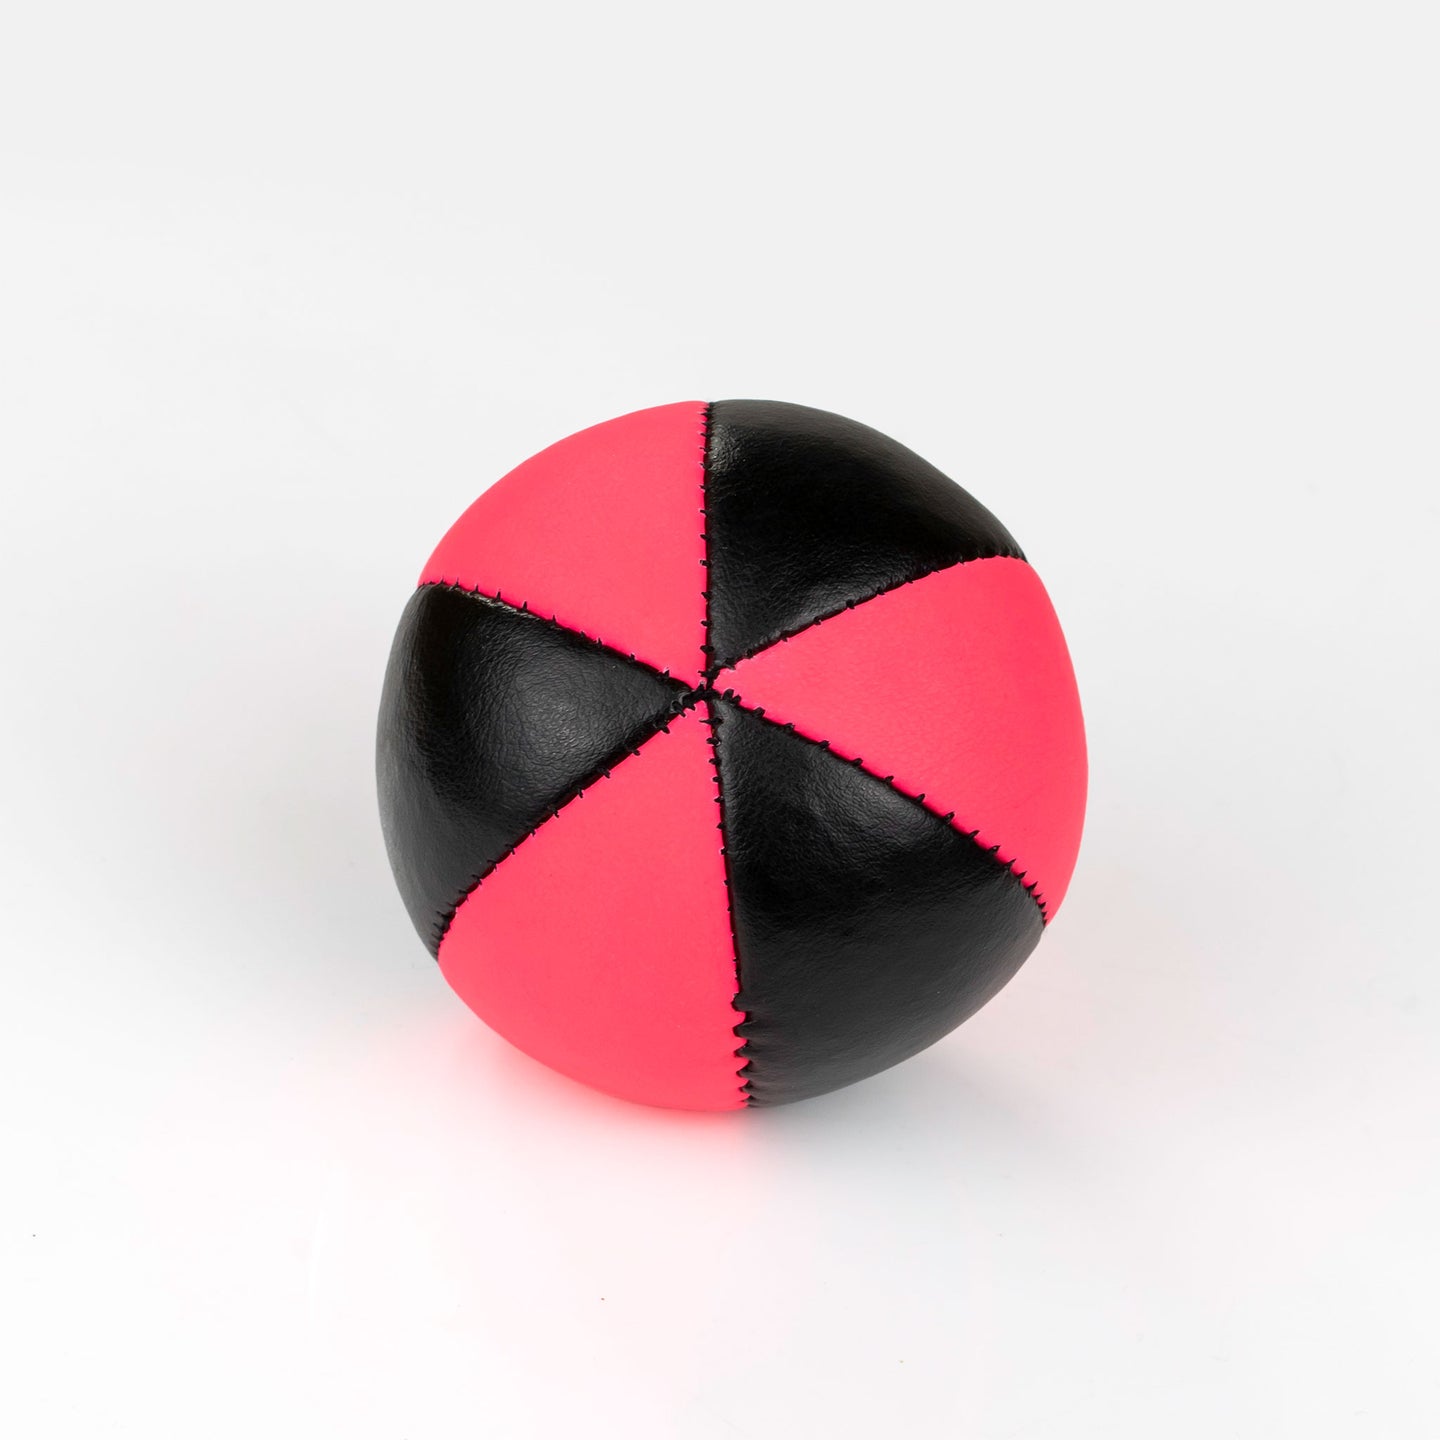 Juggle Dream Pro Star 6-Panel Juggling Ball - UV Pink / Black